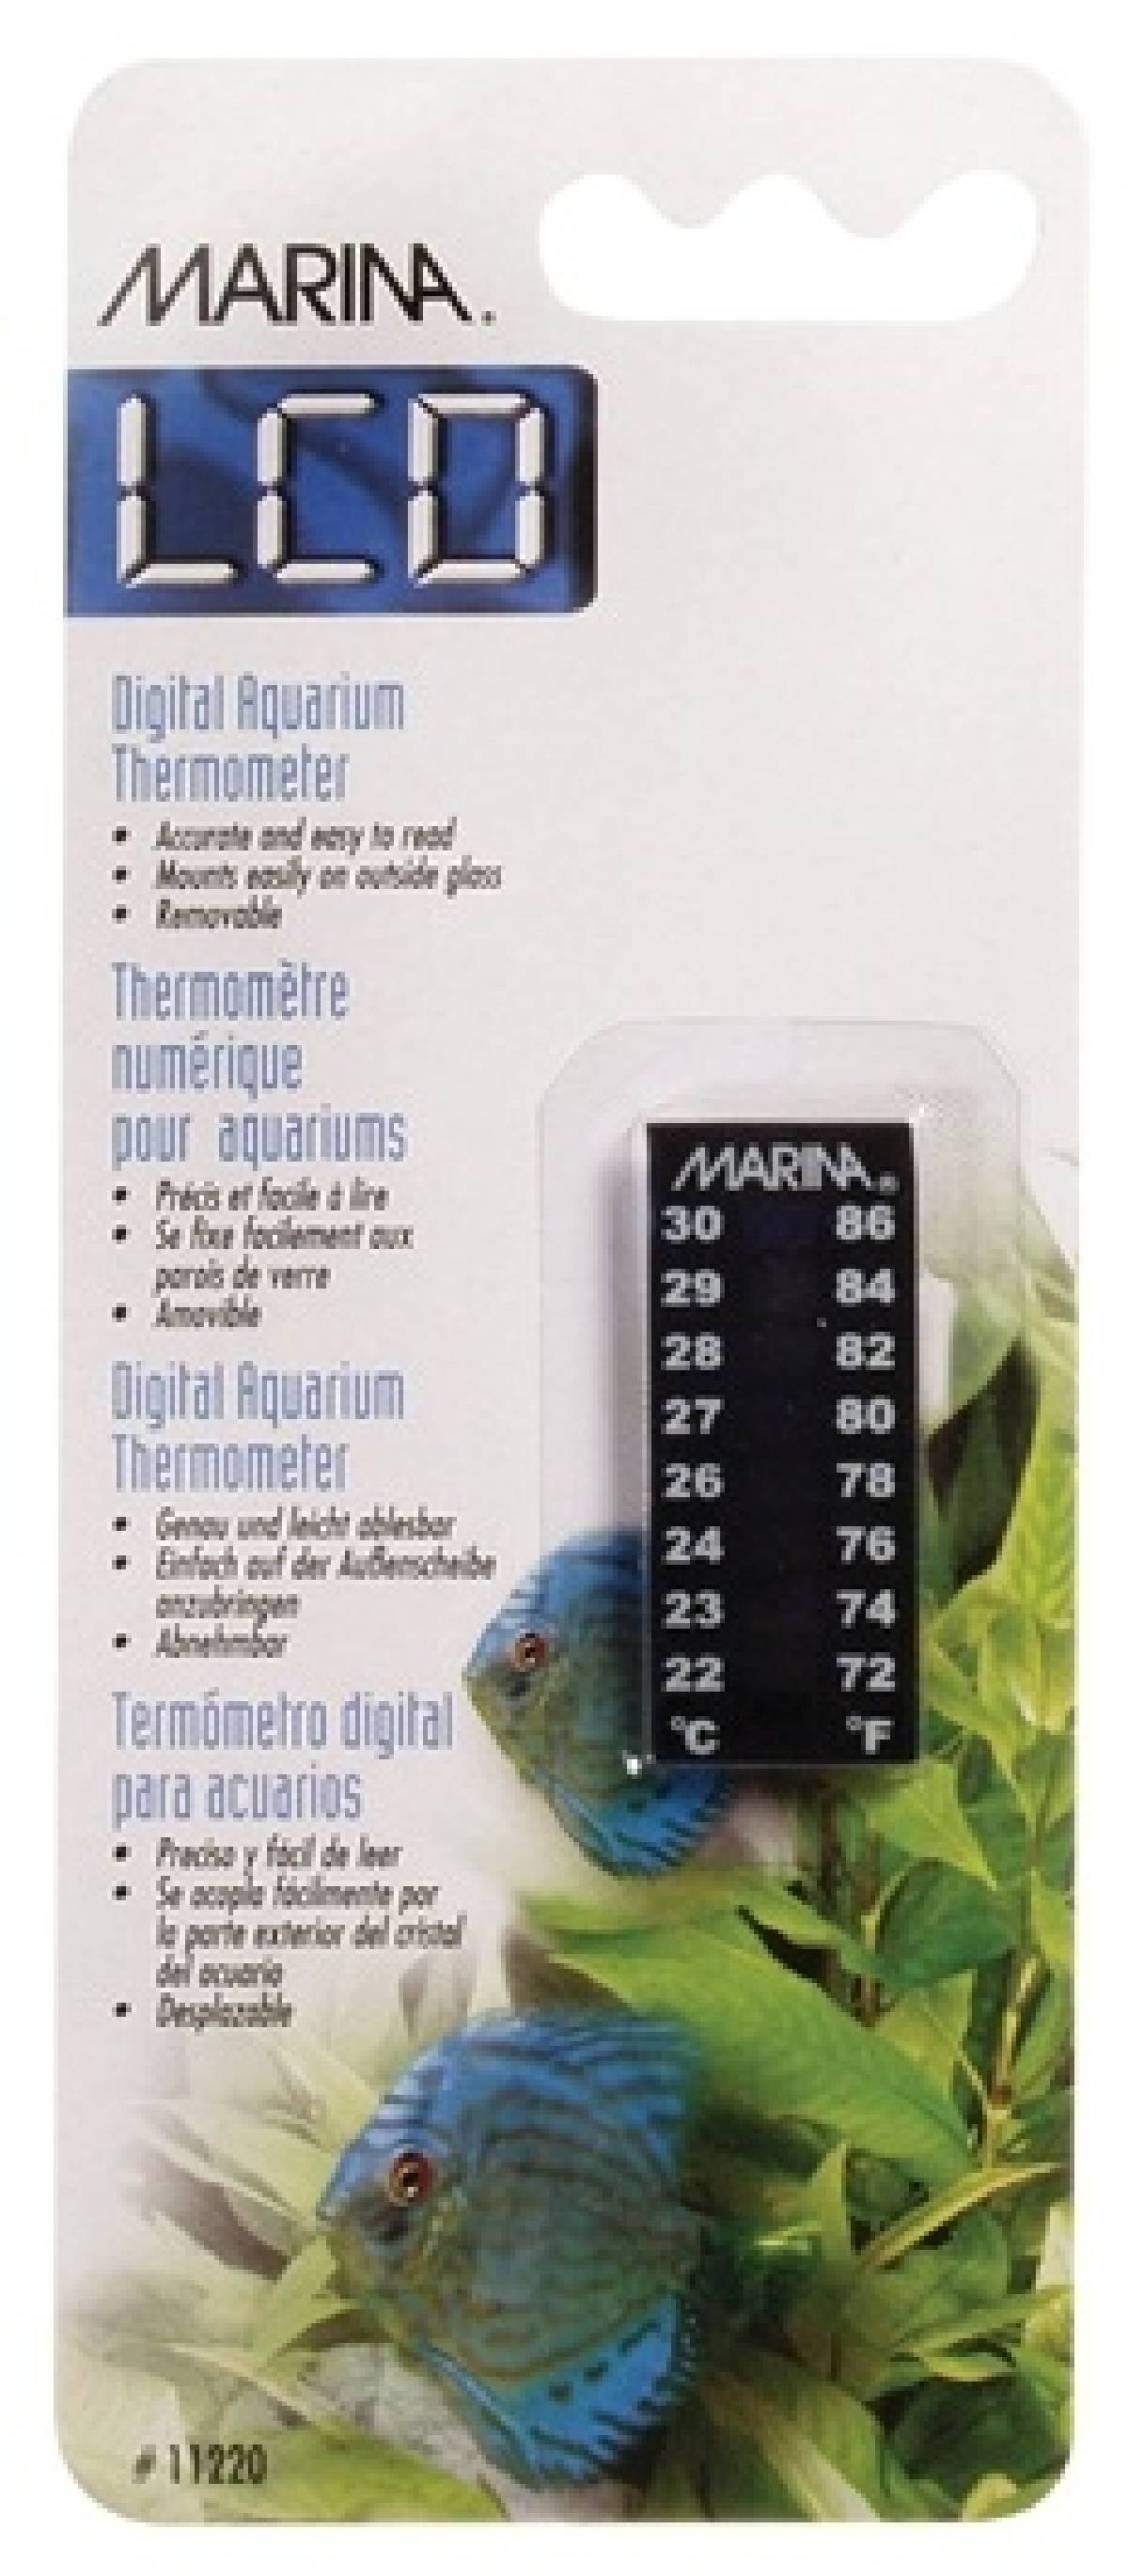 https://joshsfrogs.com/media/image/marina_lcd_aquarium_thermometer_-_josh_s_frogs-6cea2900.jpg